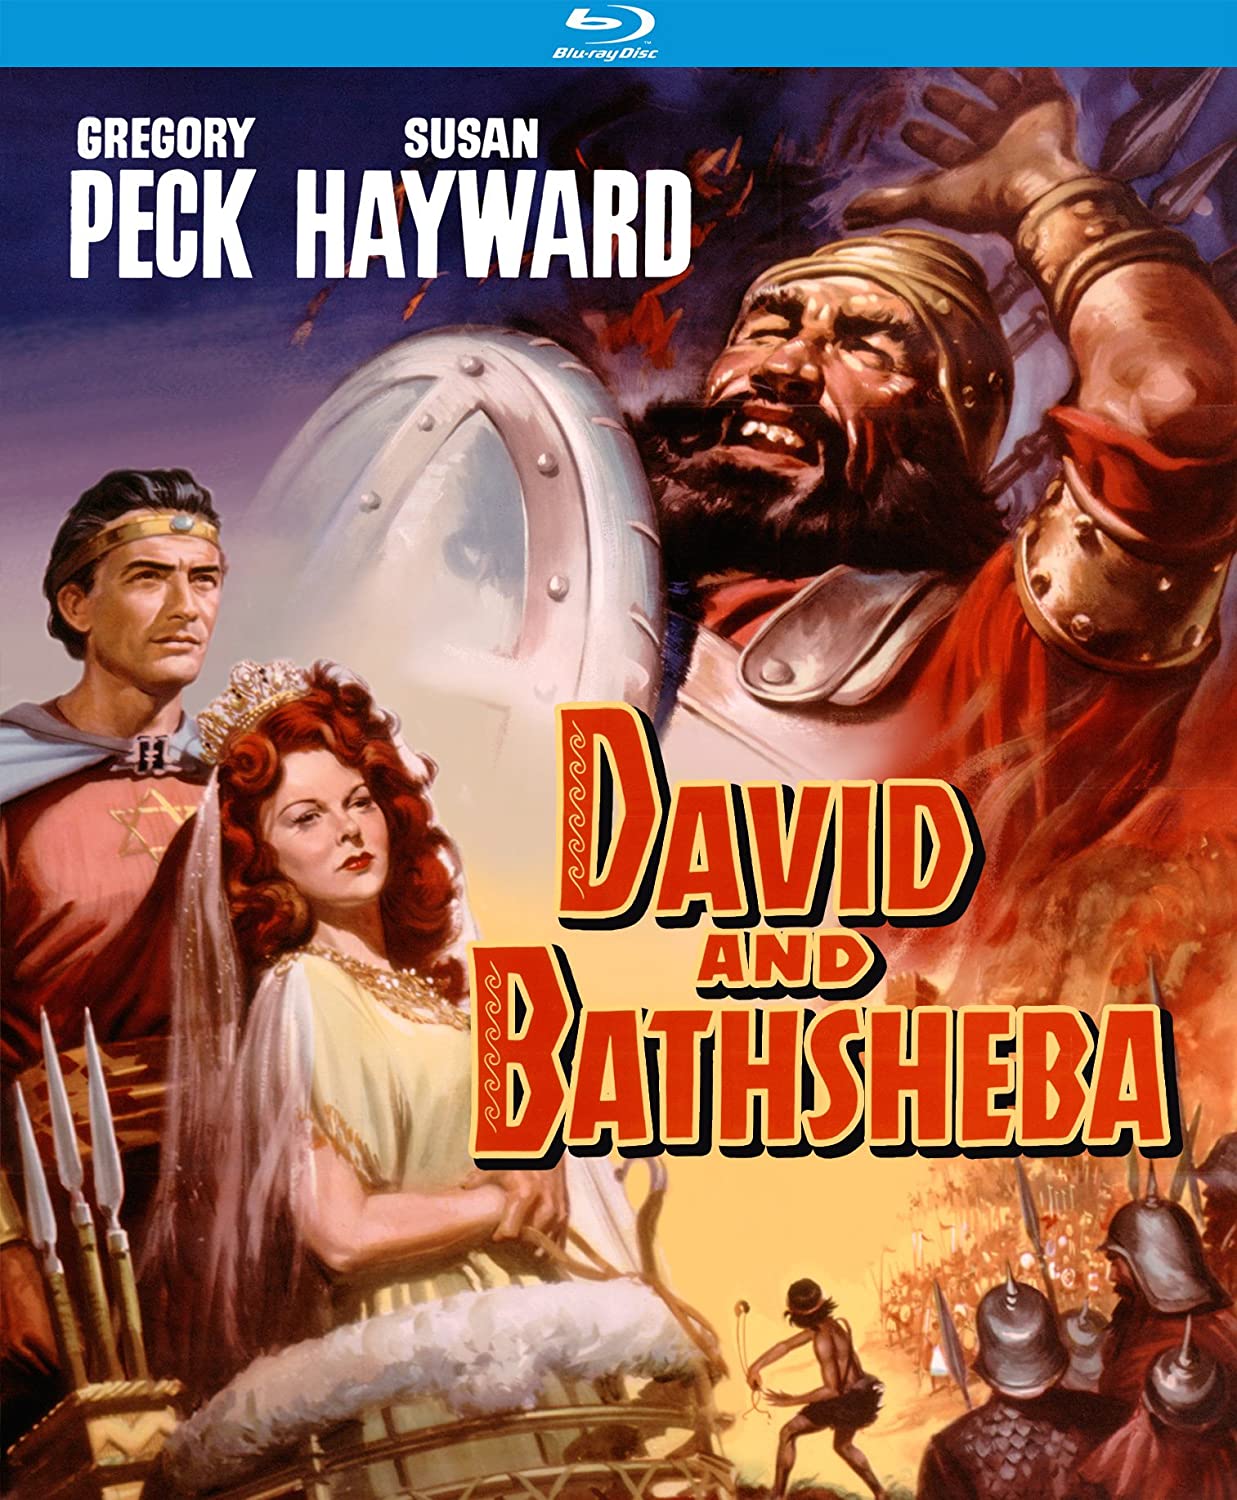 David and Bathsheba (1951) starring Gregory Peck, Susan Hayward